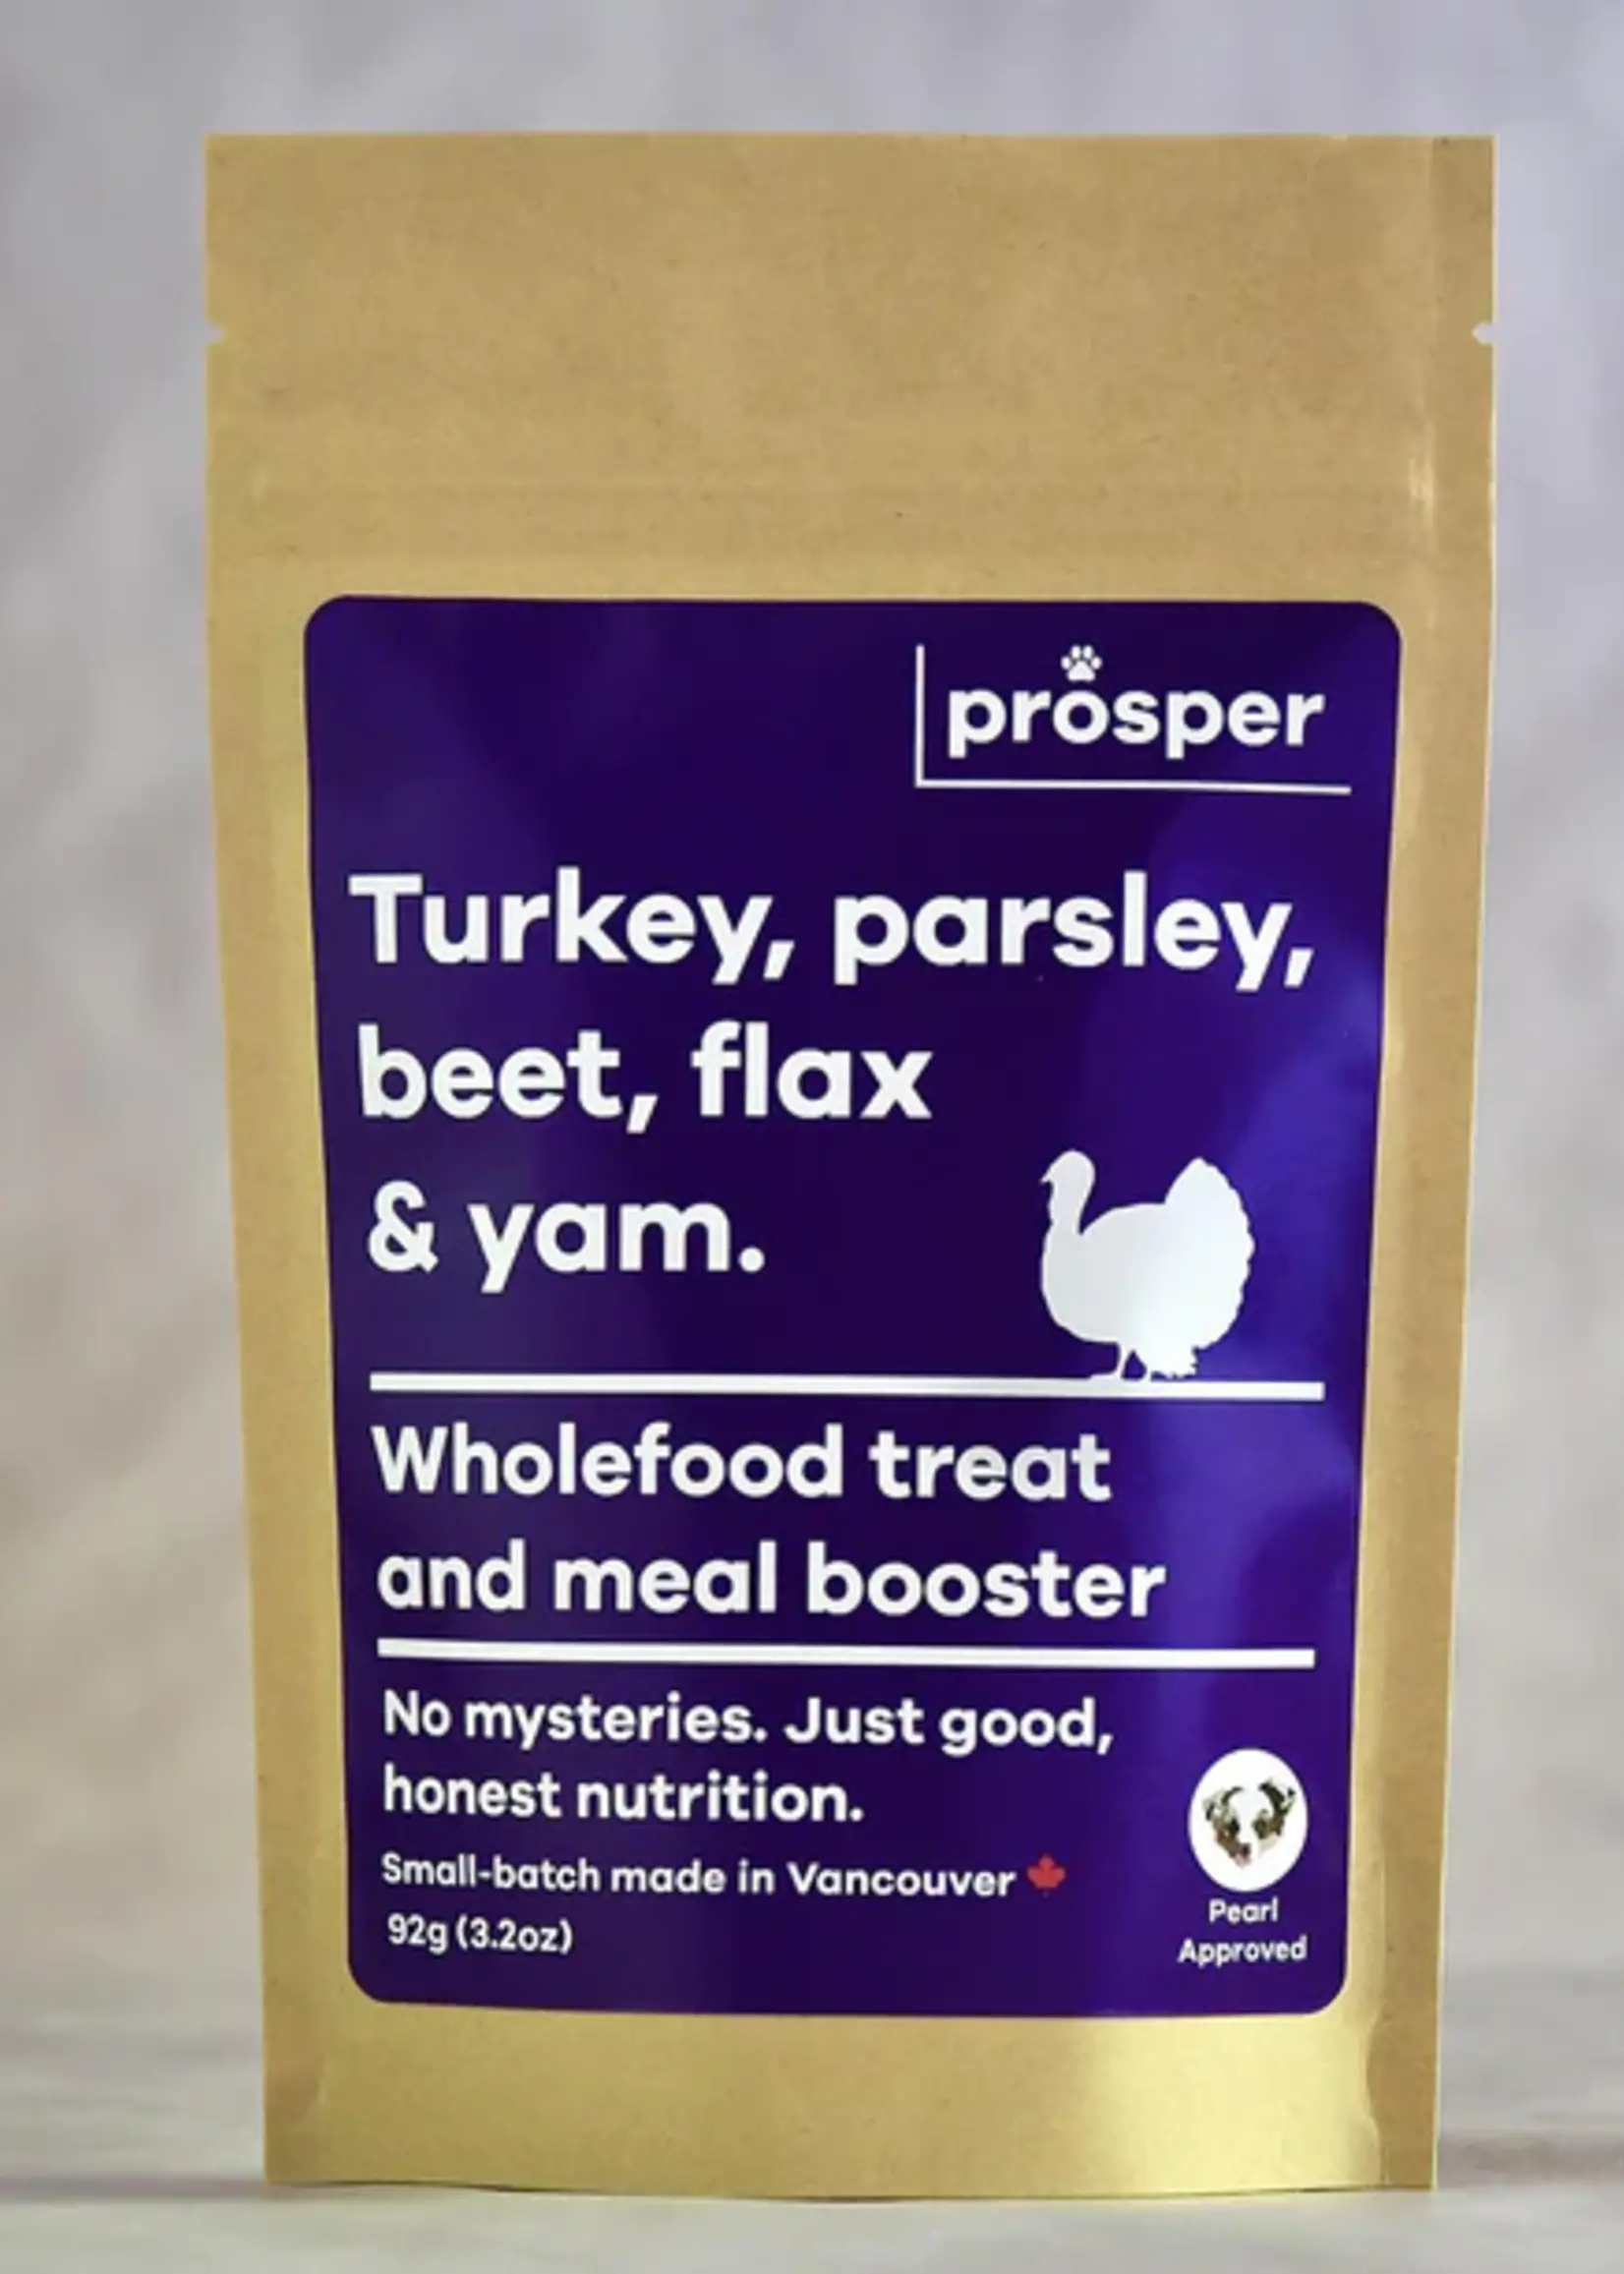 Prosper- Turkey, parsley, beet, flax, and yam